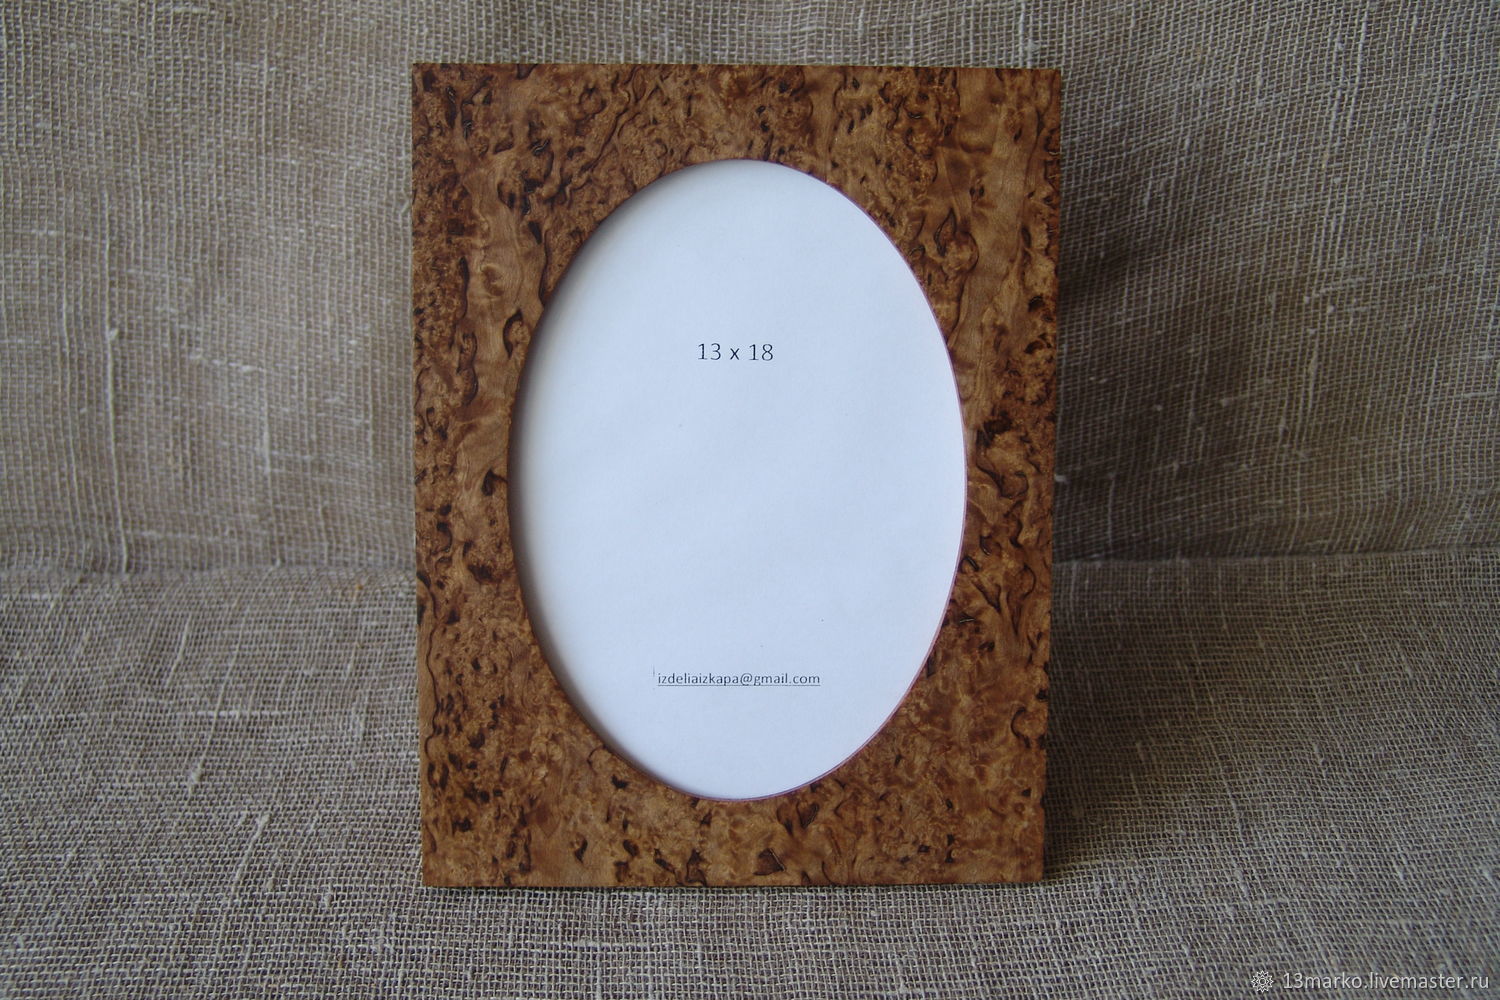 Souvenirs and gifts Fair Masters - handmade, Buy photo Frame made of Karelian birch Handmade 18h18h
